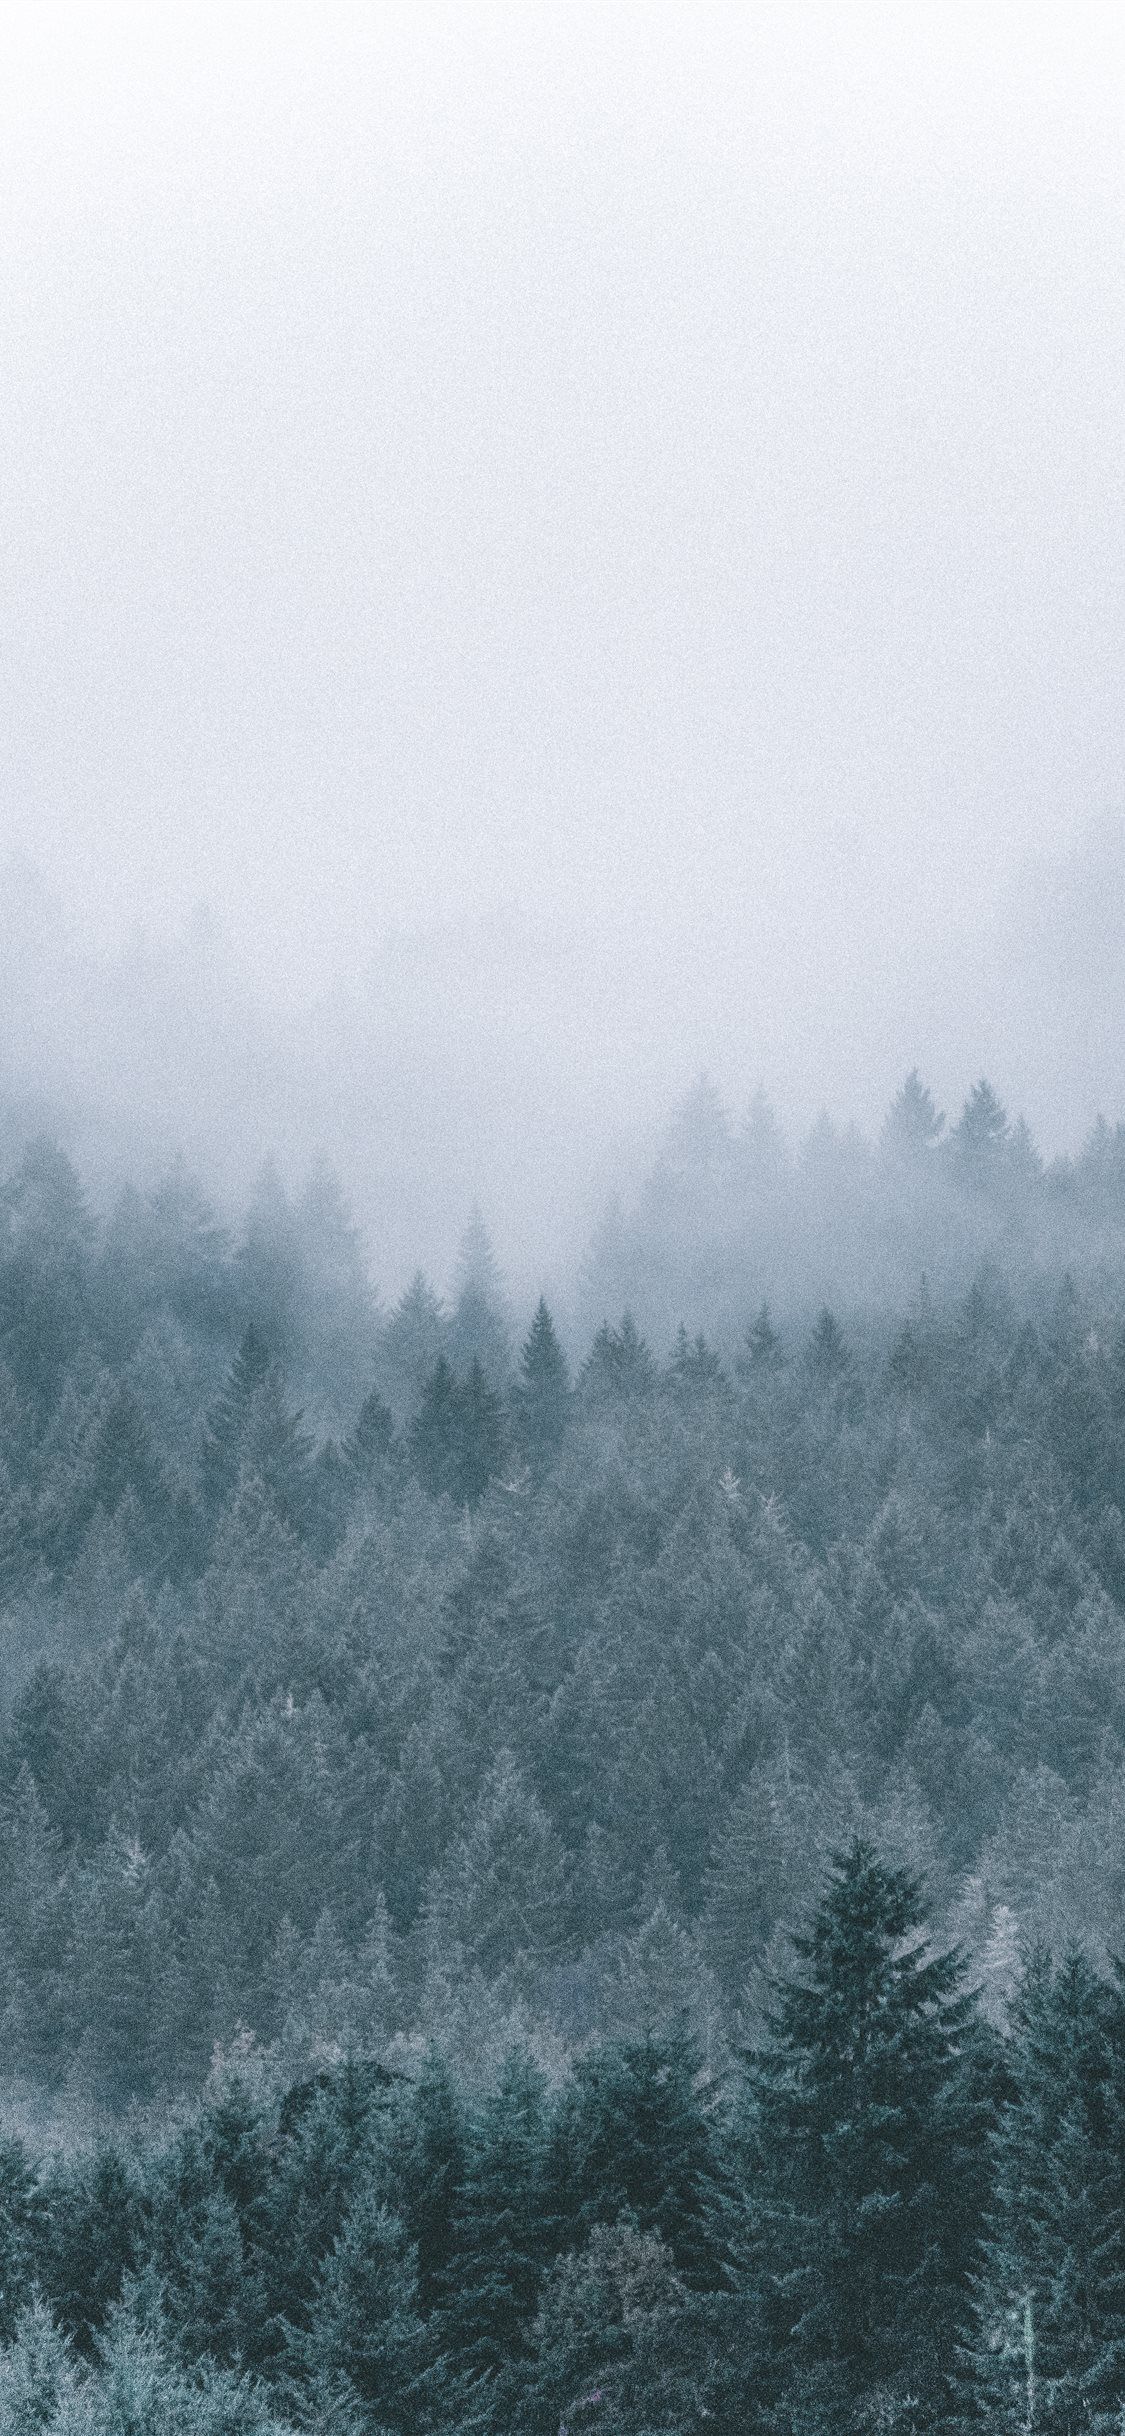 foggy icy green pine trees scenery Wallpaper. Tree wallpaper iphone, Tree mountain wallpaper, Tree scenery wallpaper